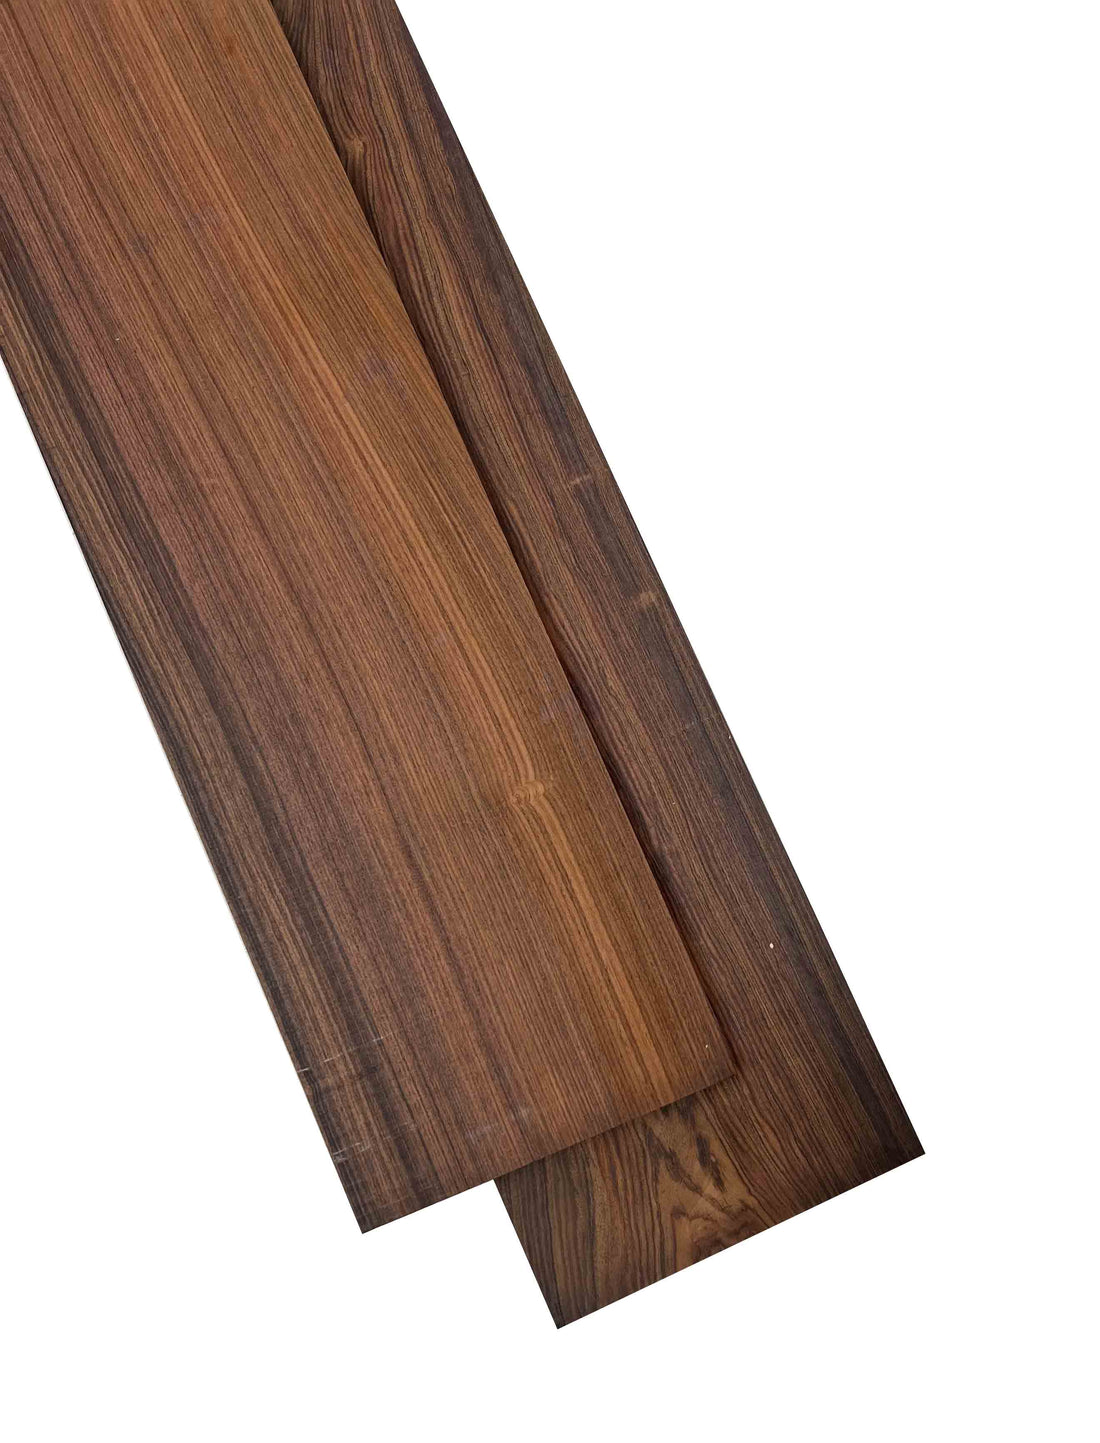 Premium Morado/Santos Rosewood 4/4 Lumber - Exotic Wood Zone - Buy online Across USA 